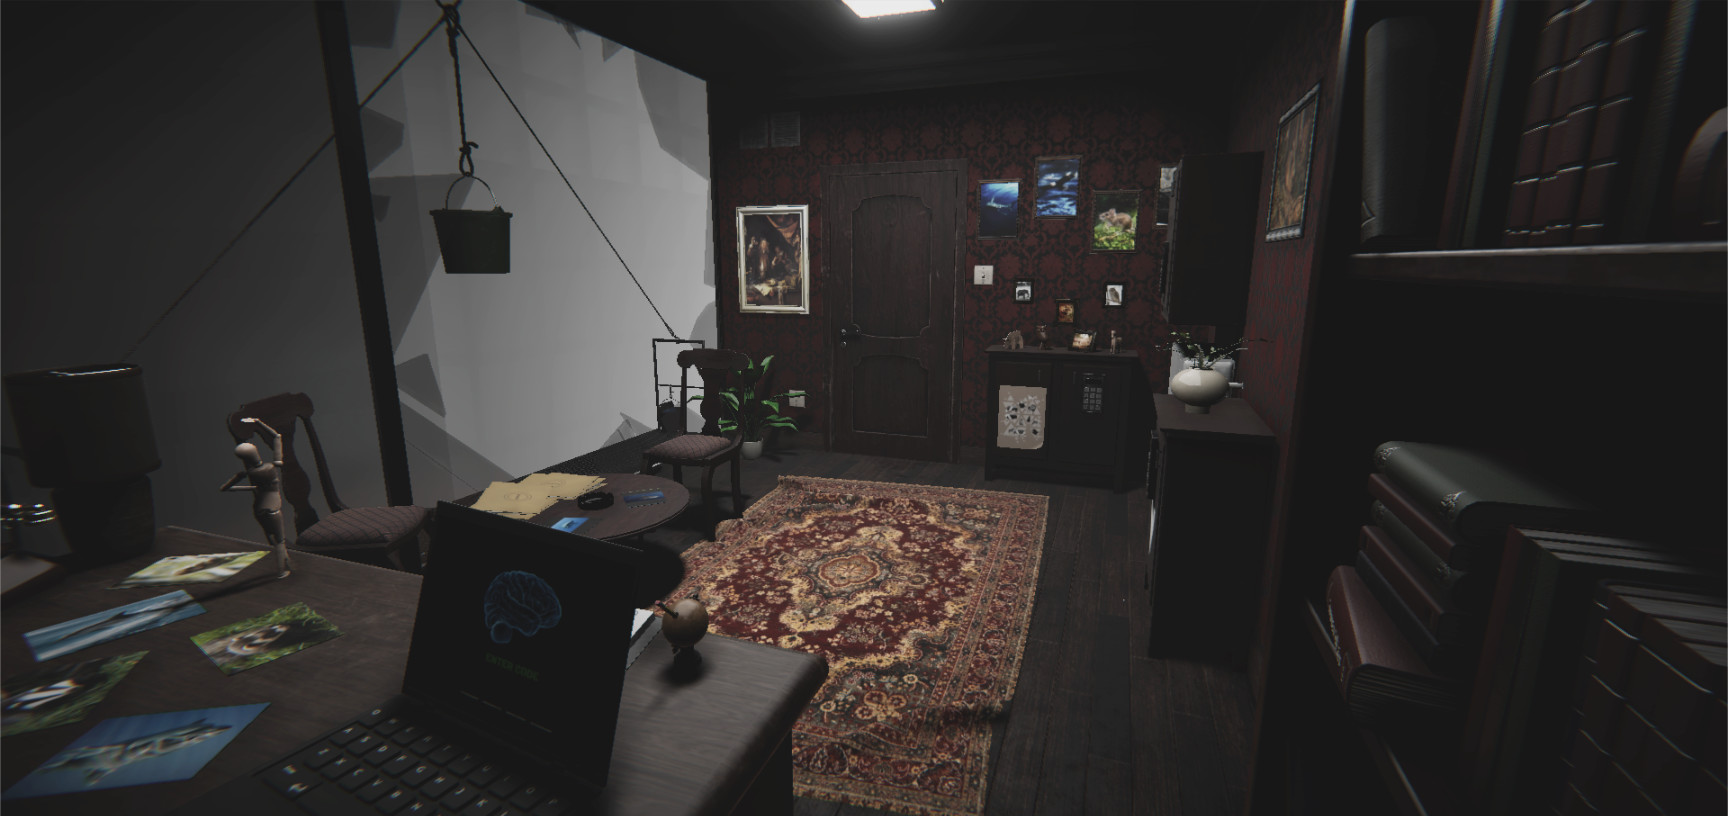 Escape Room VR: Bundle on Steam